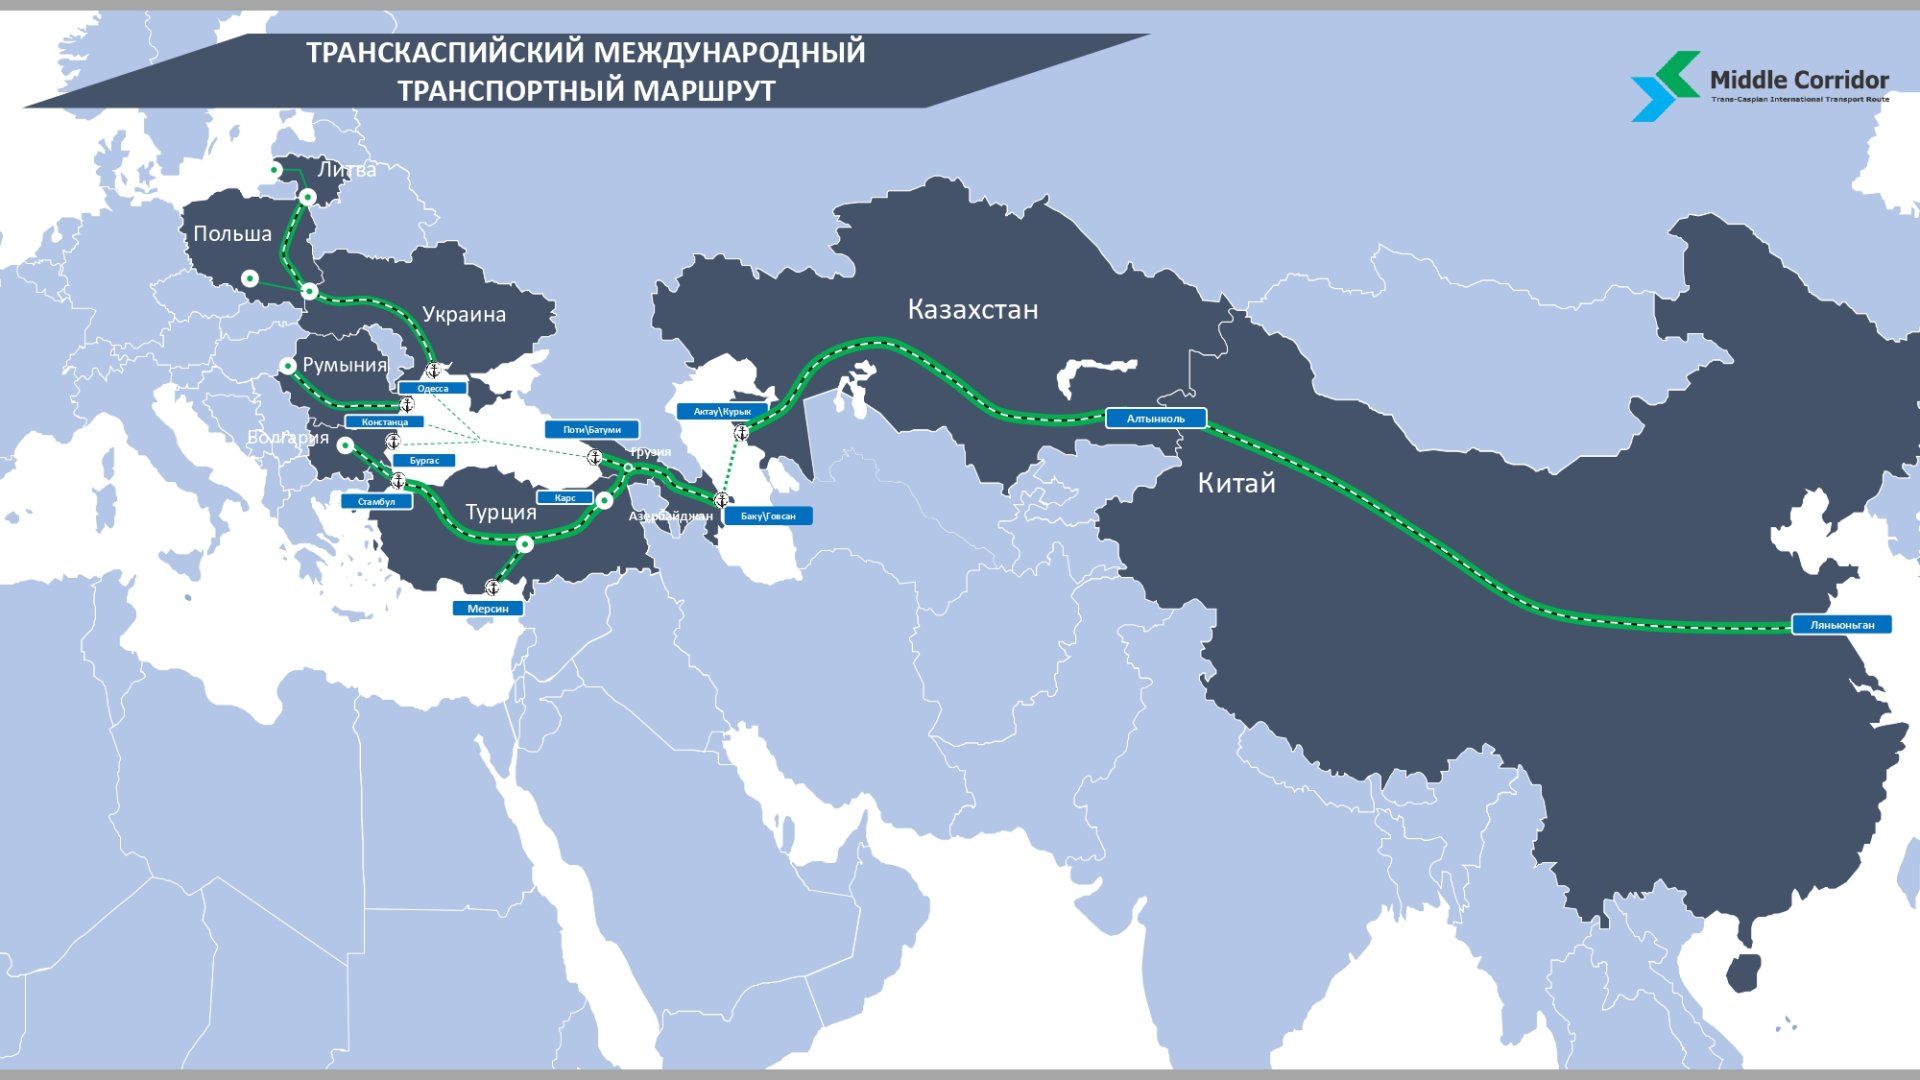 Kazakhstan Railways offers opportunities on TITR for foreign ambassadors